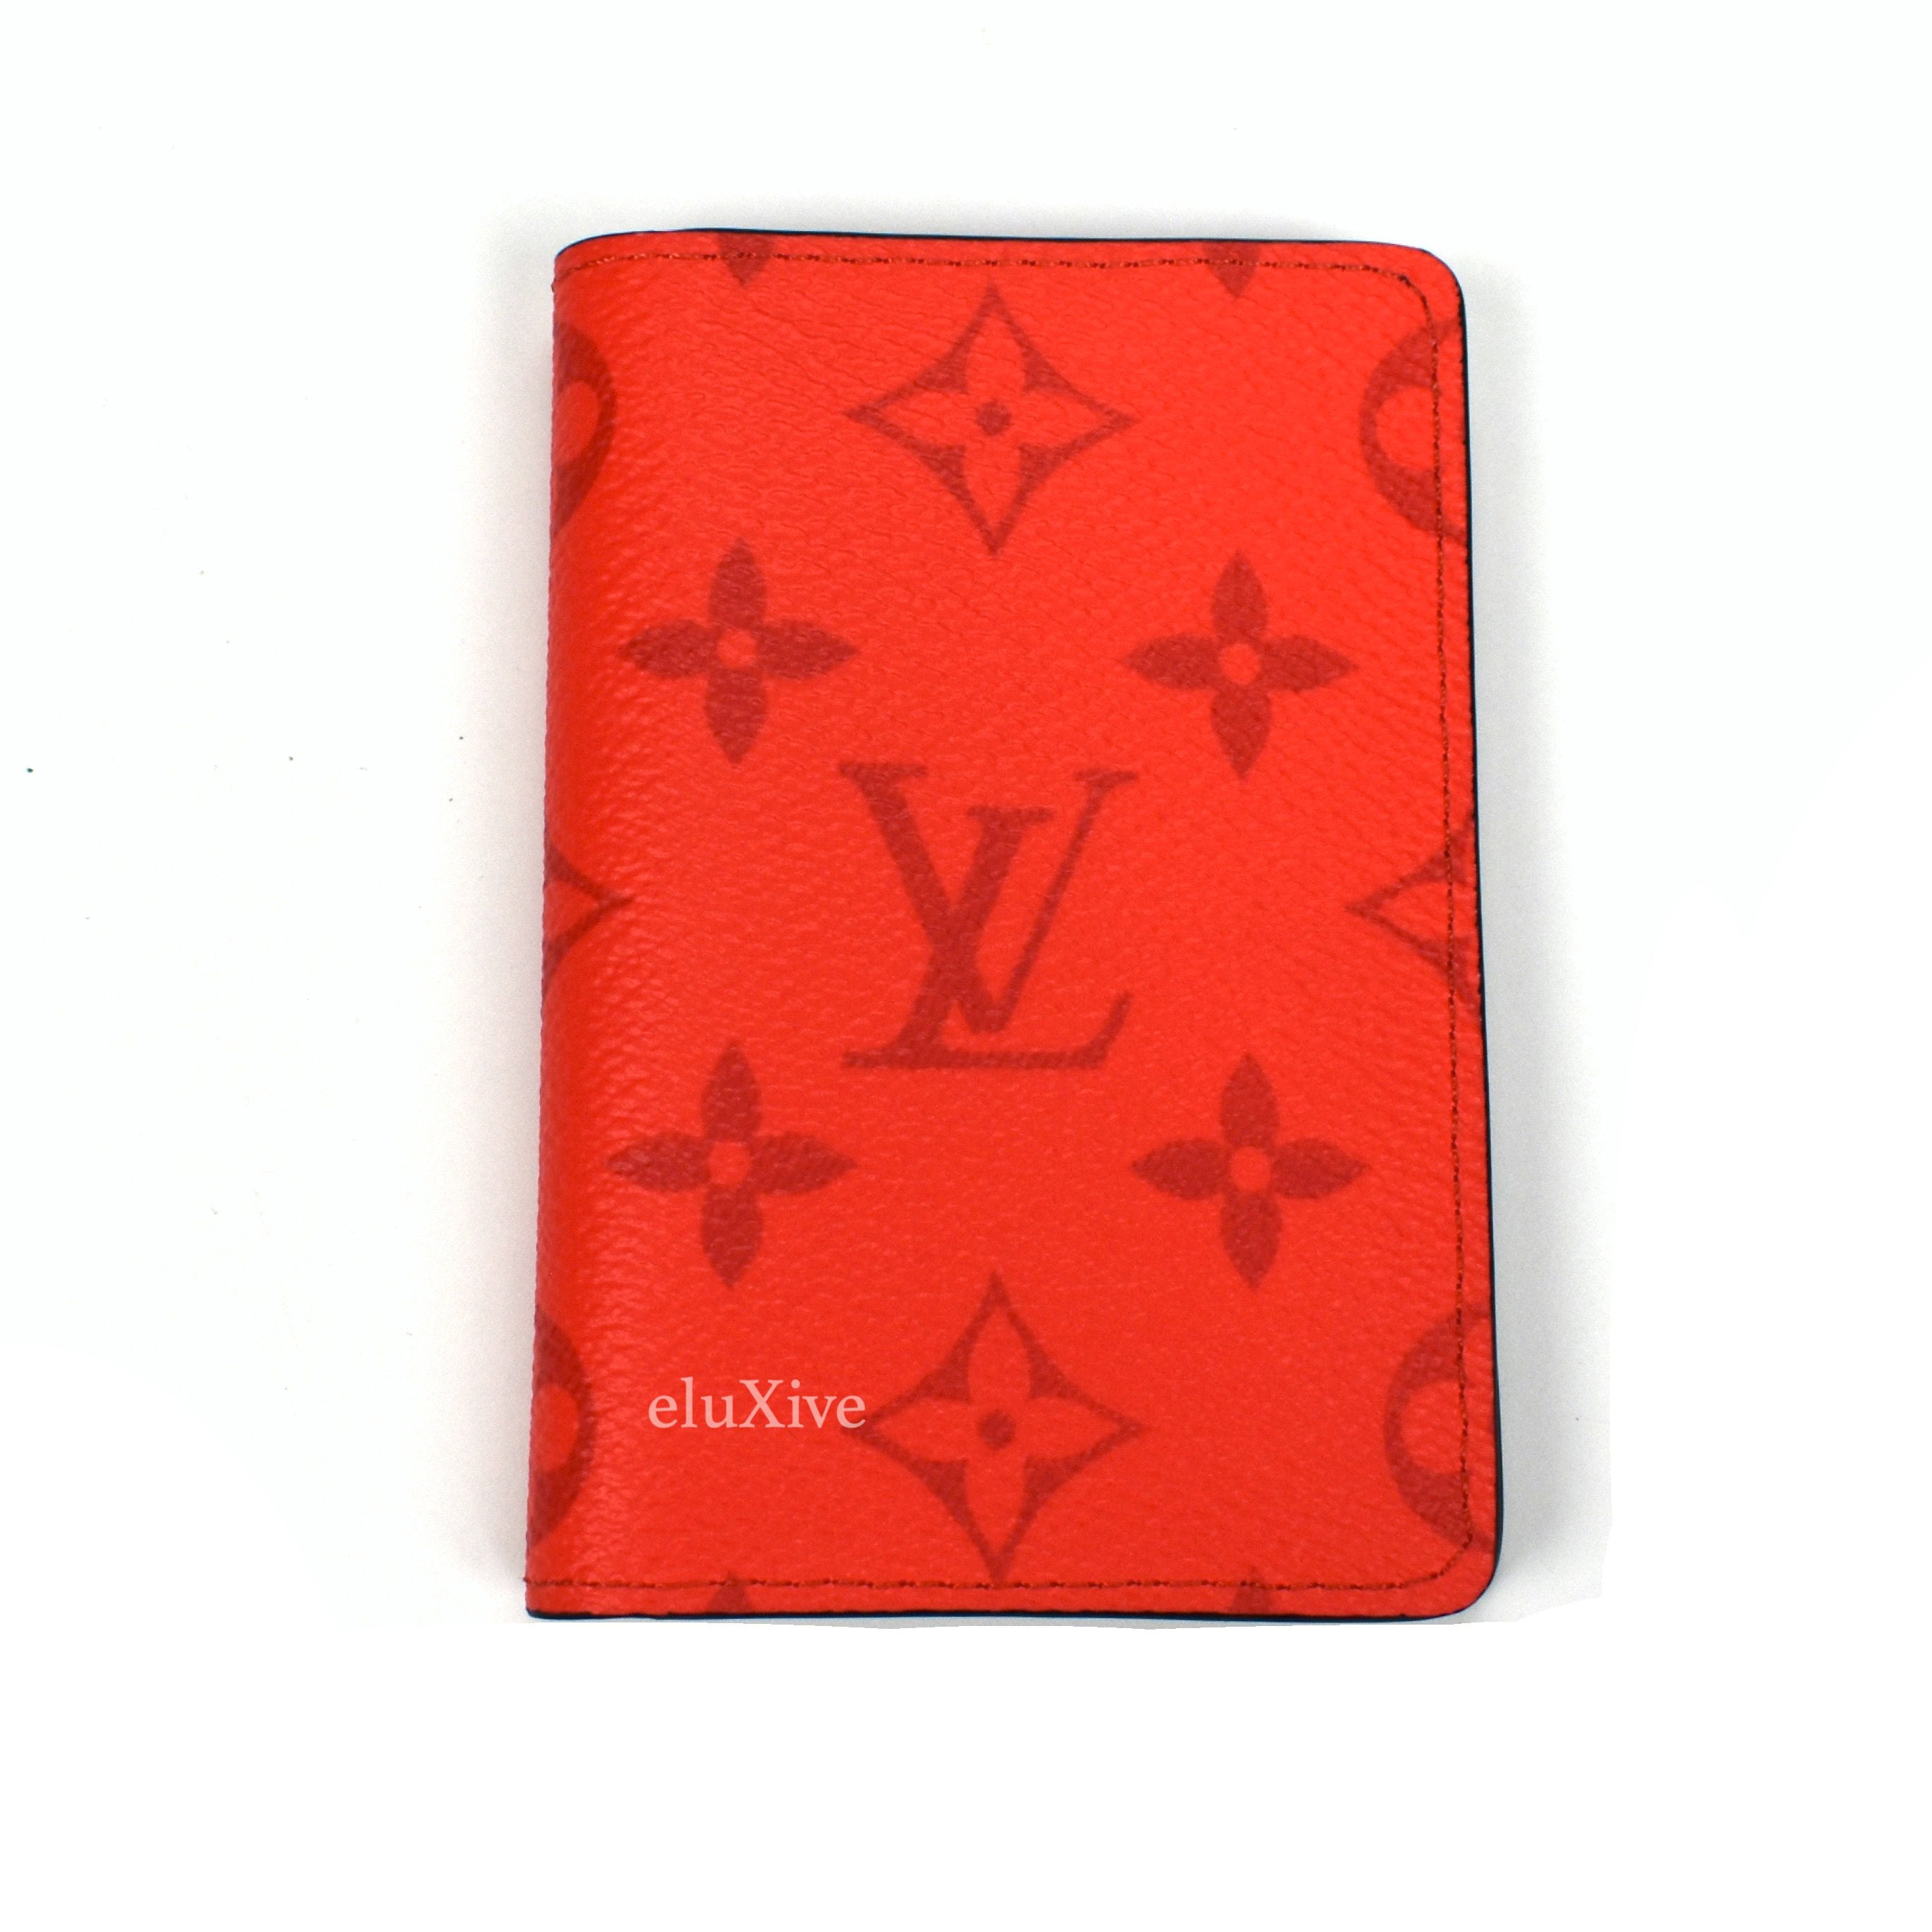 Louis Vuitton Pocket Organizer Monogram Canvas M80025 - RRG016